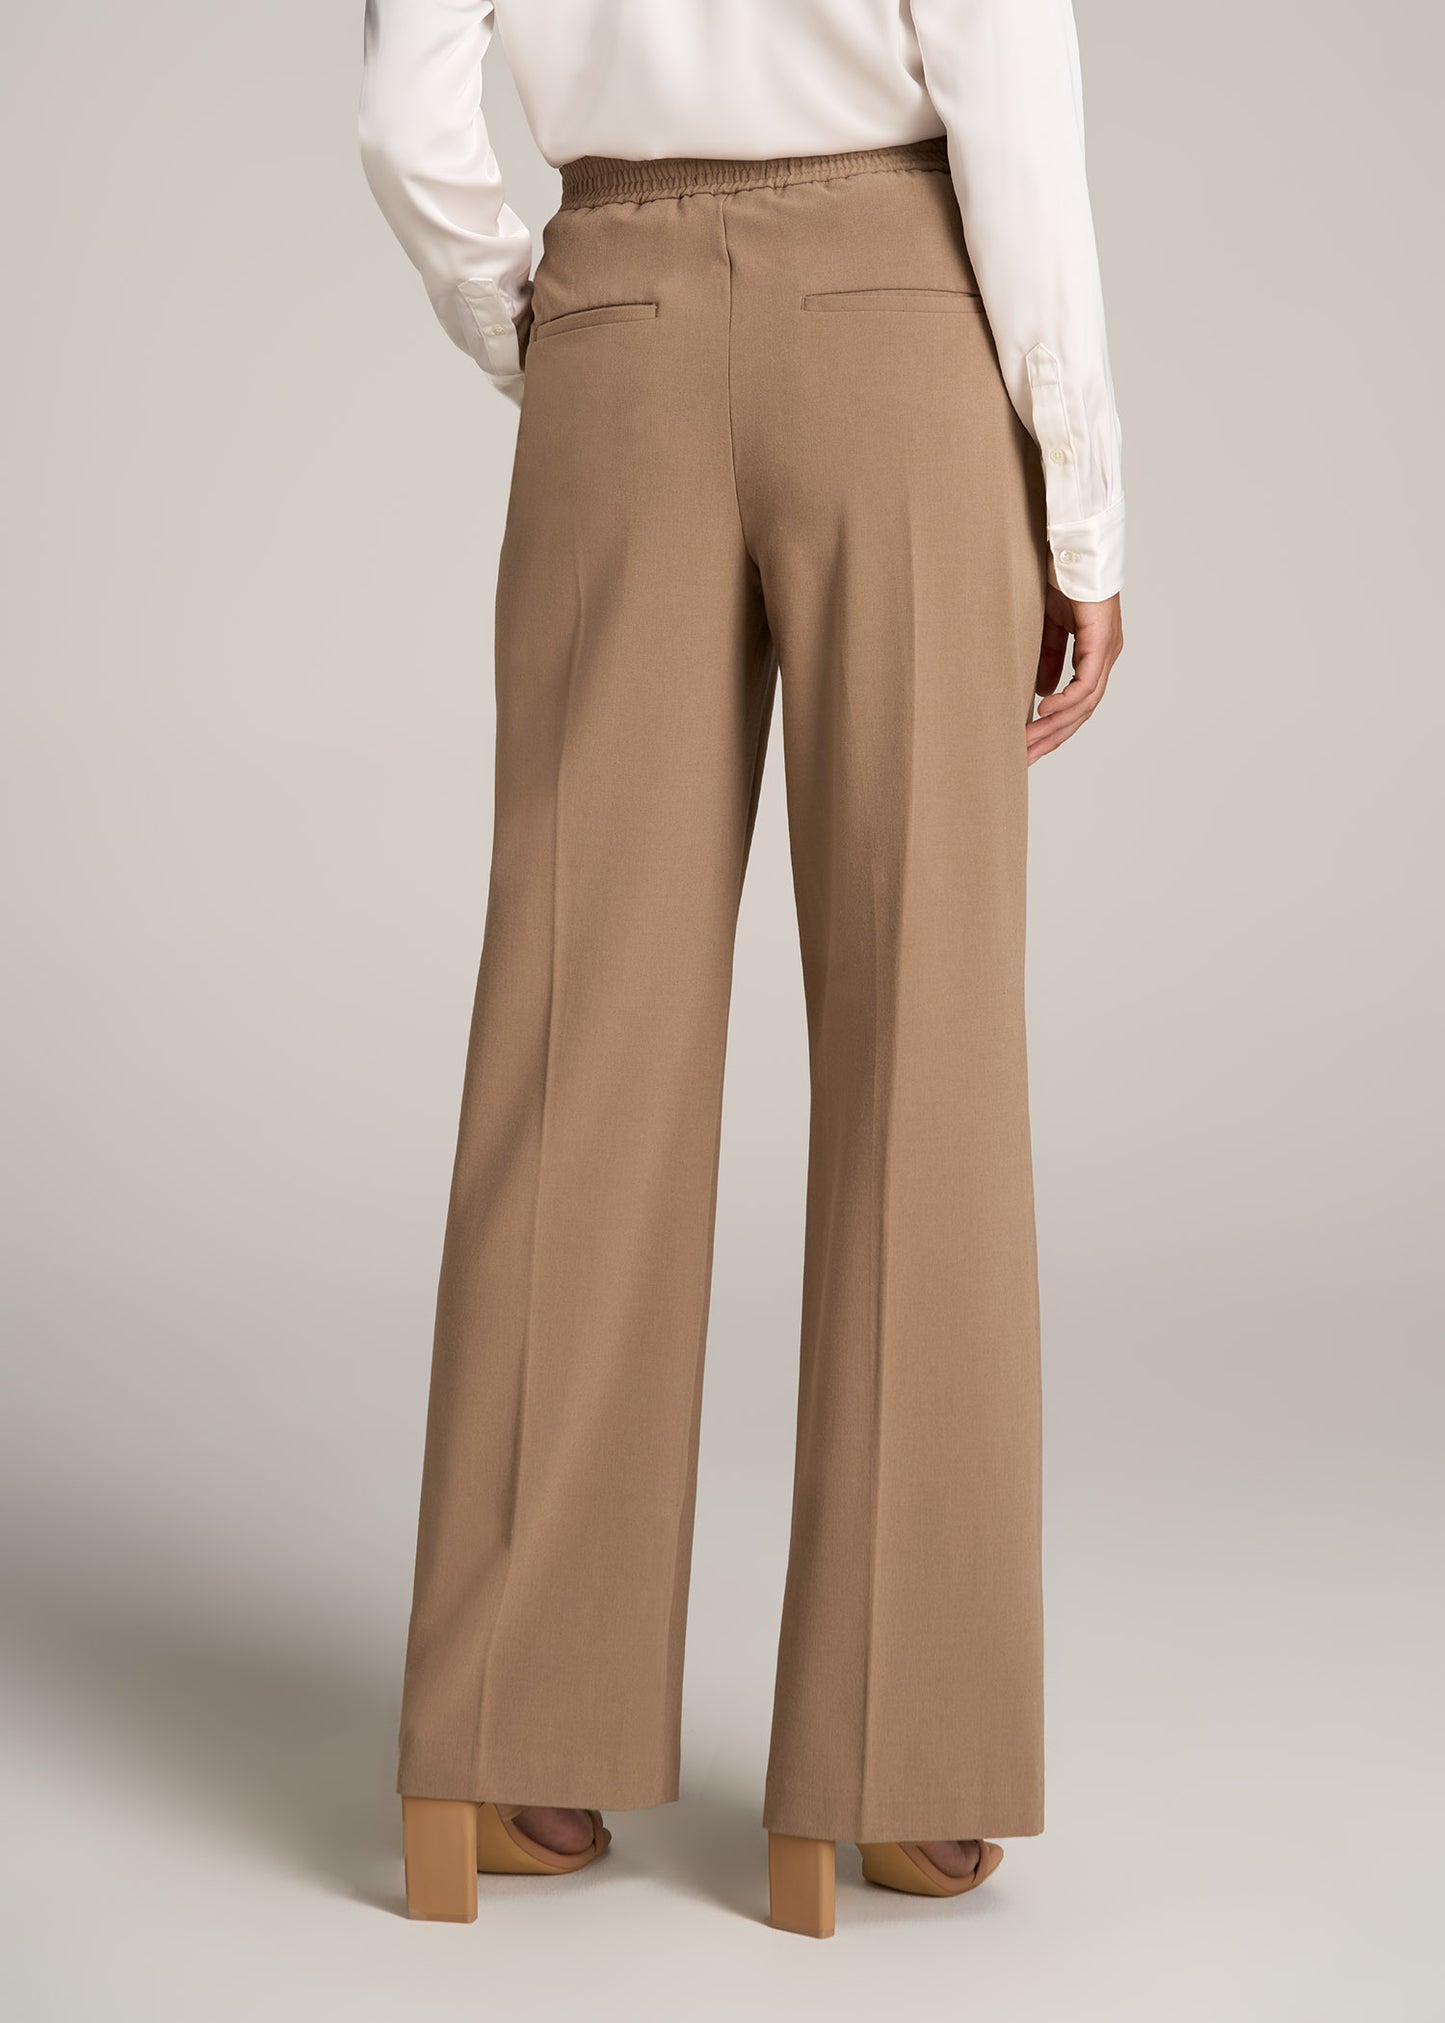 Light pink herringbone tweed flat-front Women Dress Pants | Sumissura